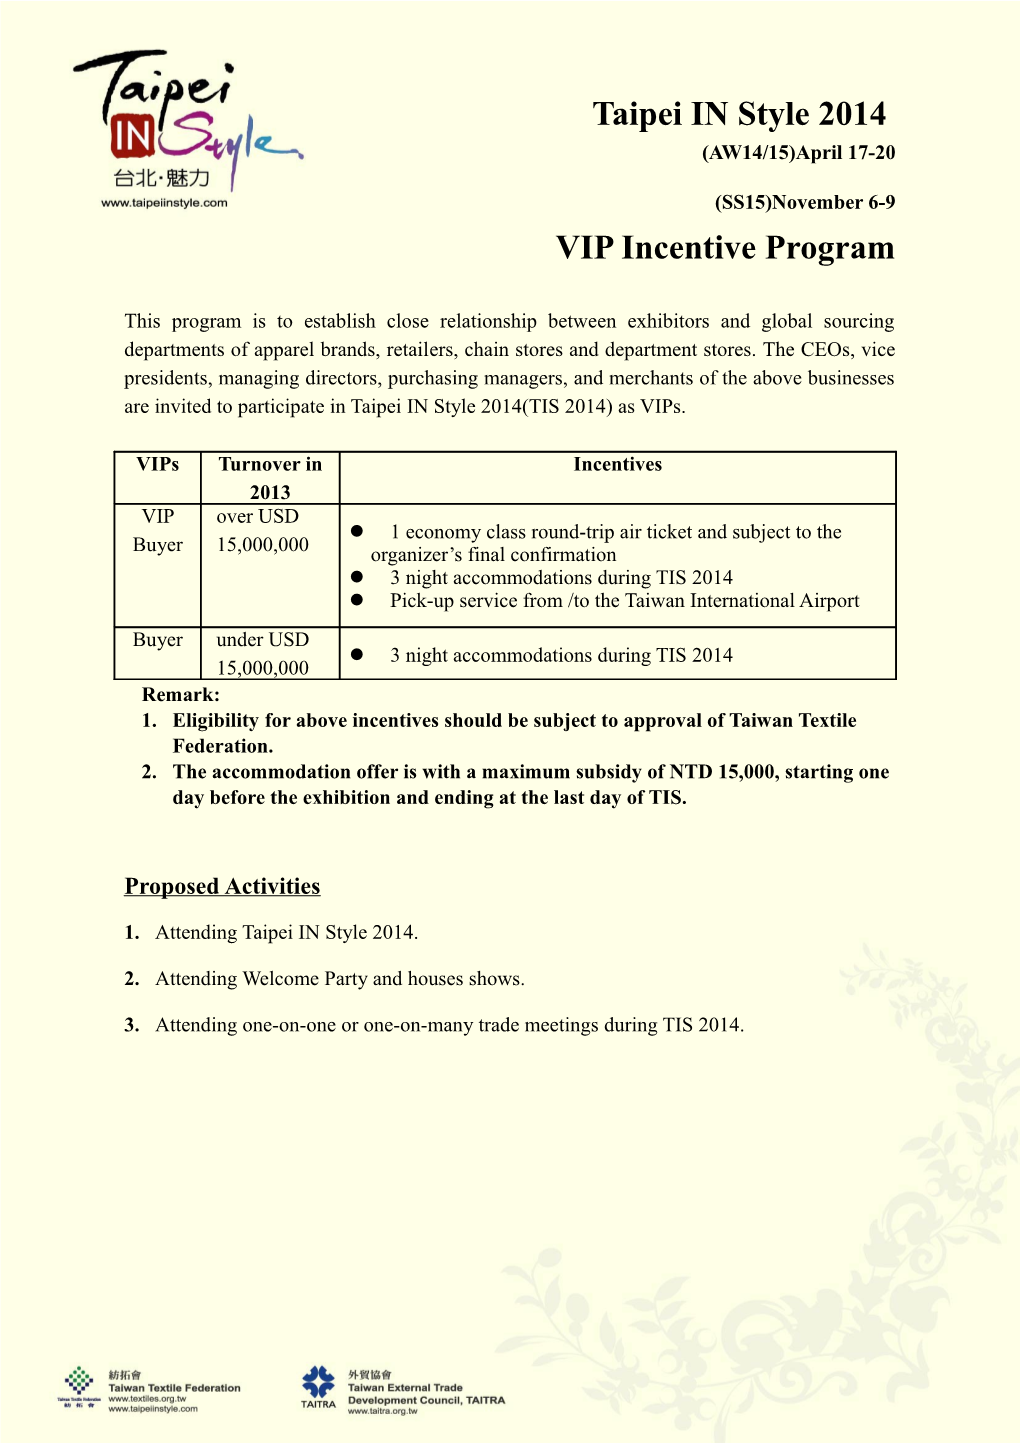 VIP Buyers Incentive Program